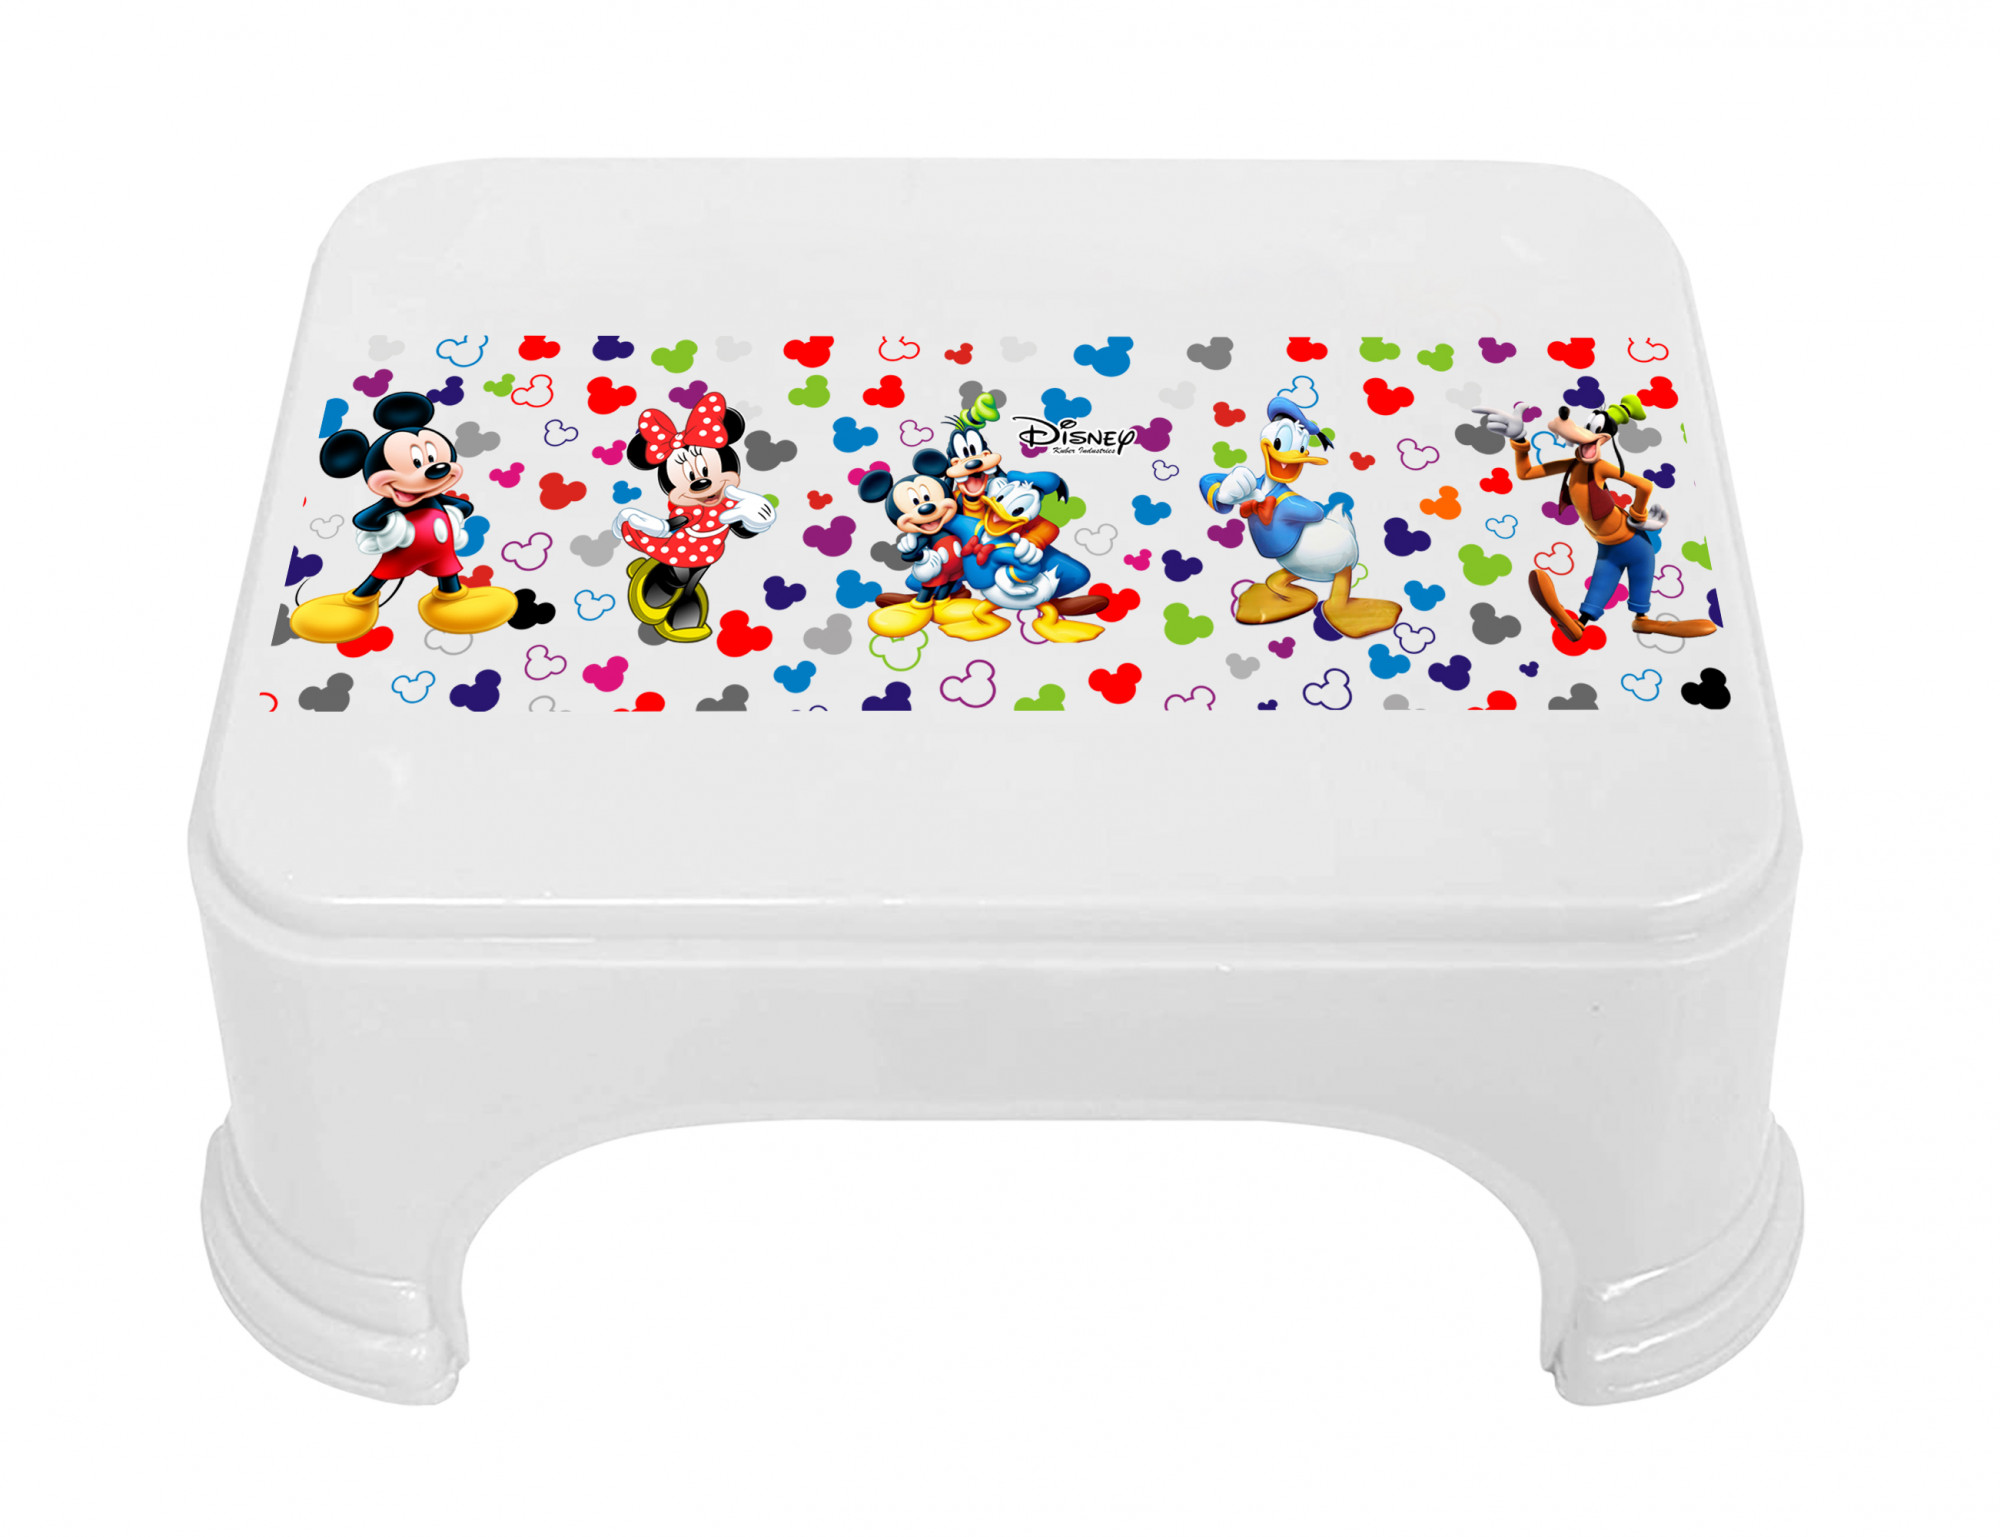 Kuber Industries Disney Team Mickey Print Square Plastic Bathroom Stool (Set of 2, Pink & White) -HS_35_KUBMART17289